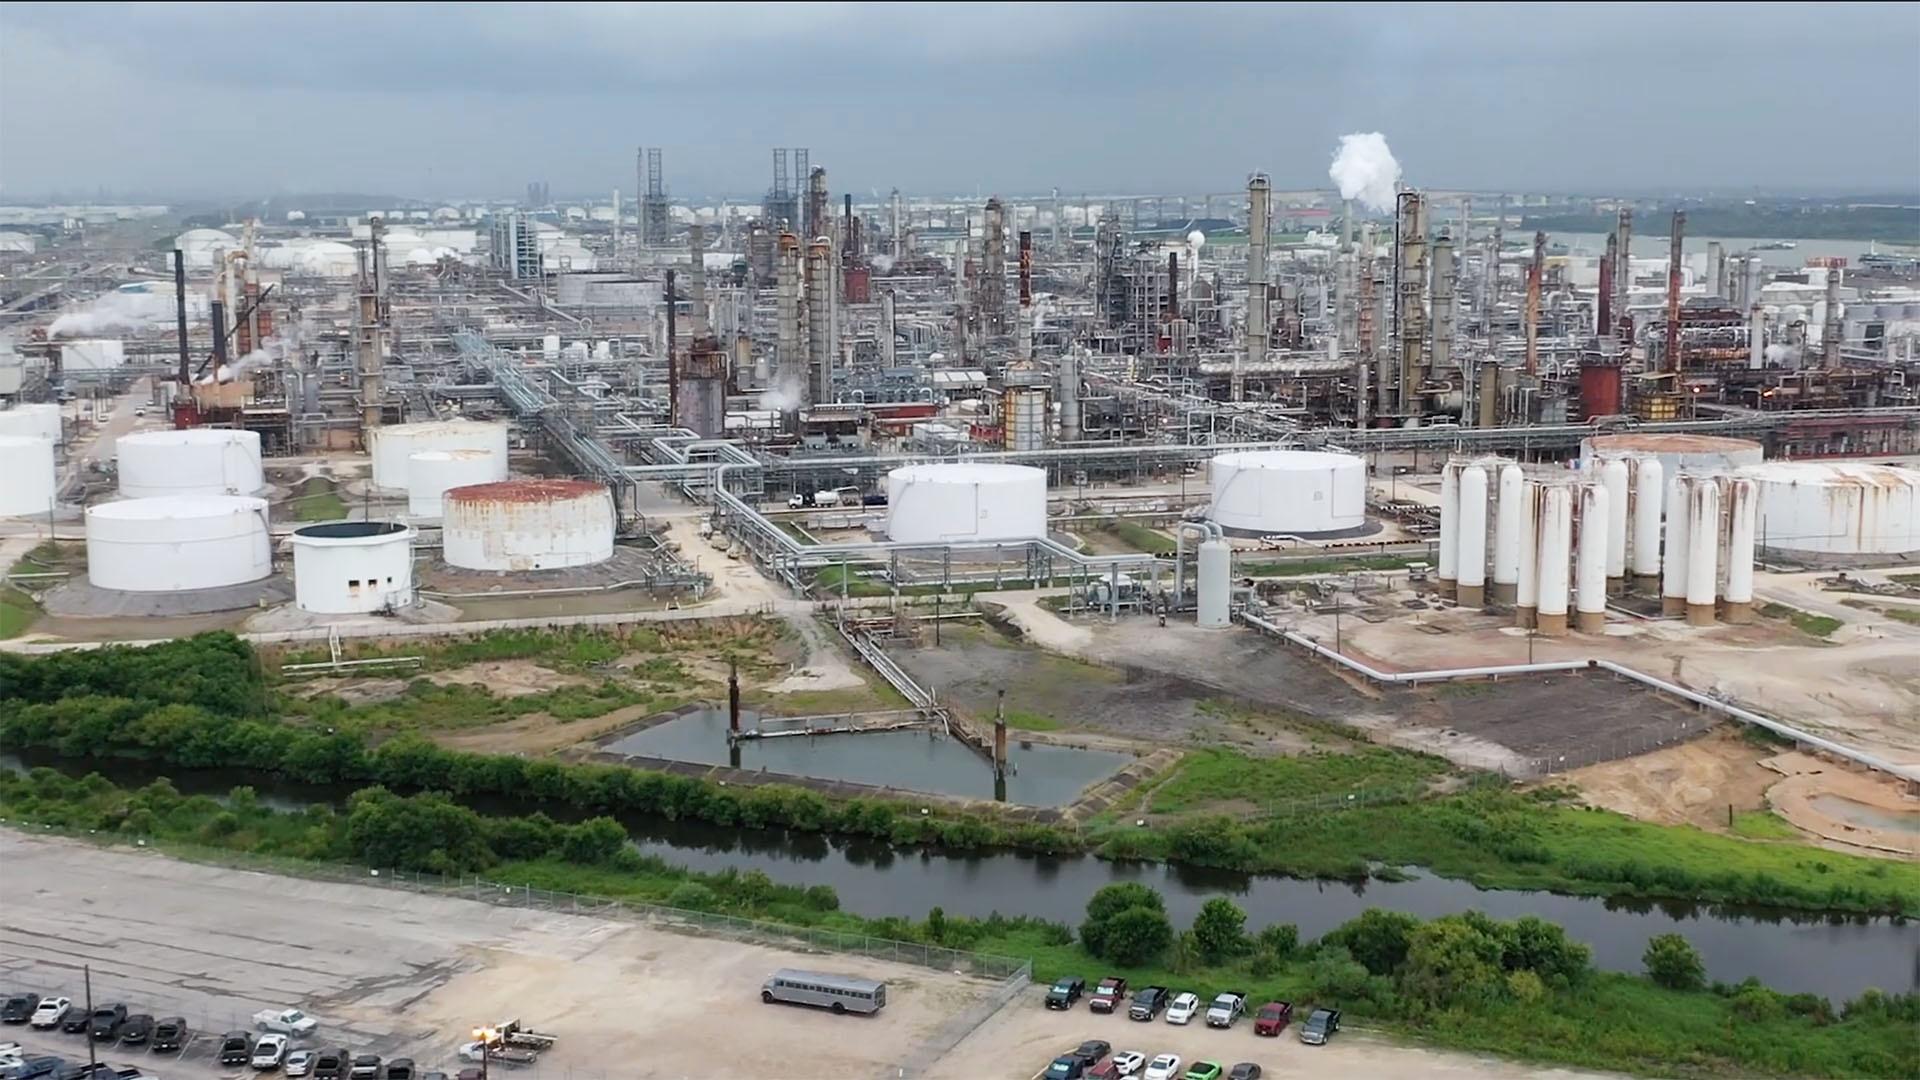 Industrial plants in Houston, Texas.